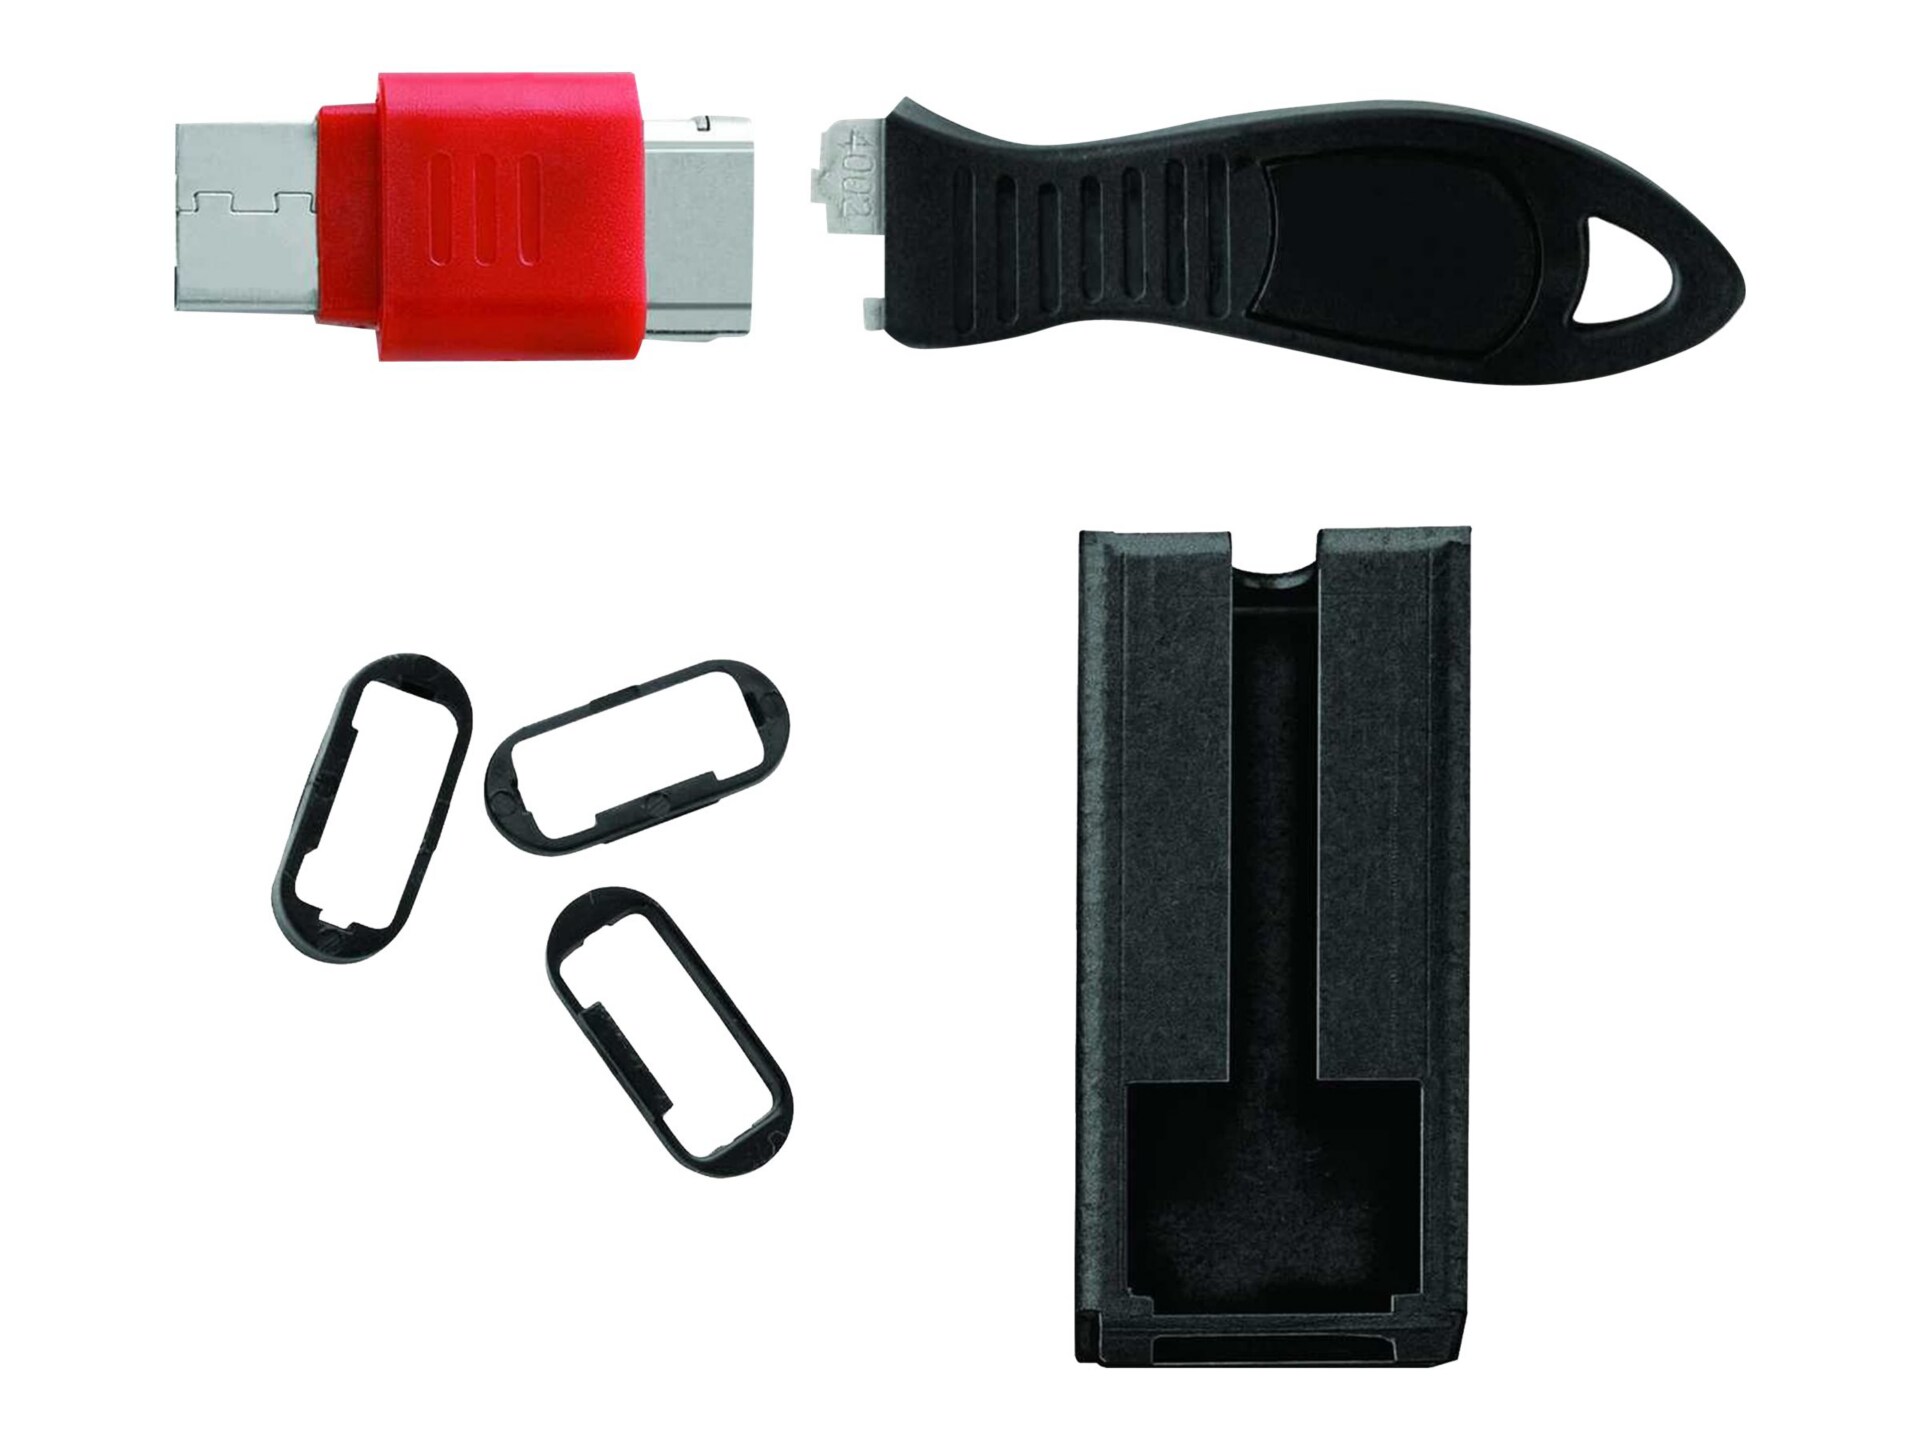 Kensington USB Port Lock with Cable Guard- Square